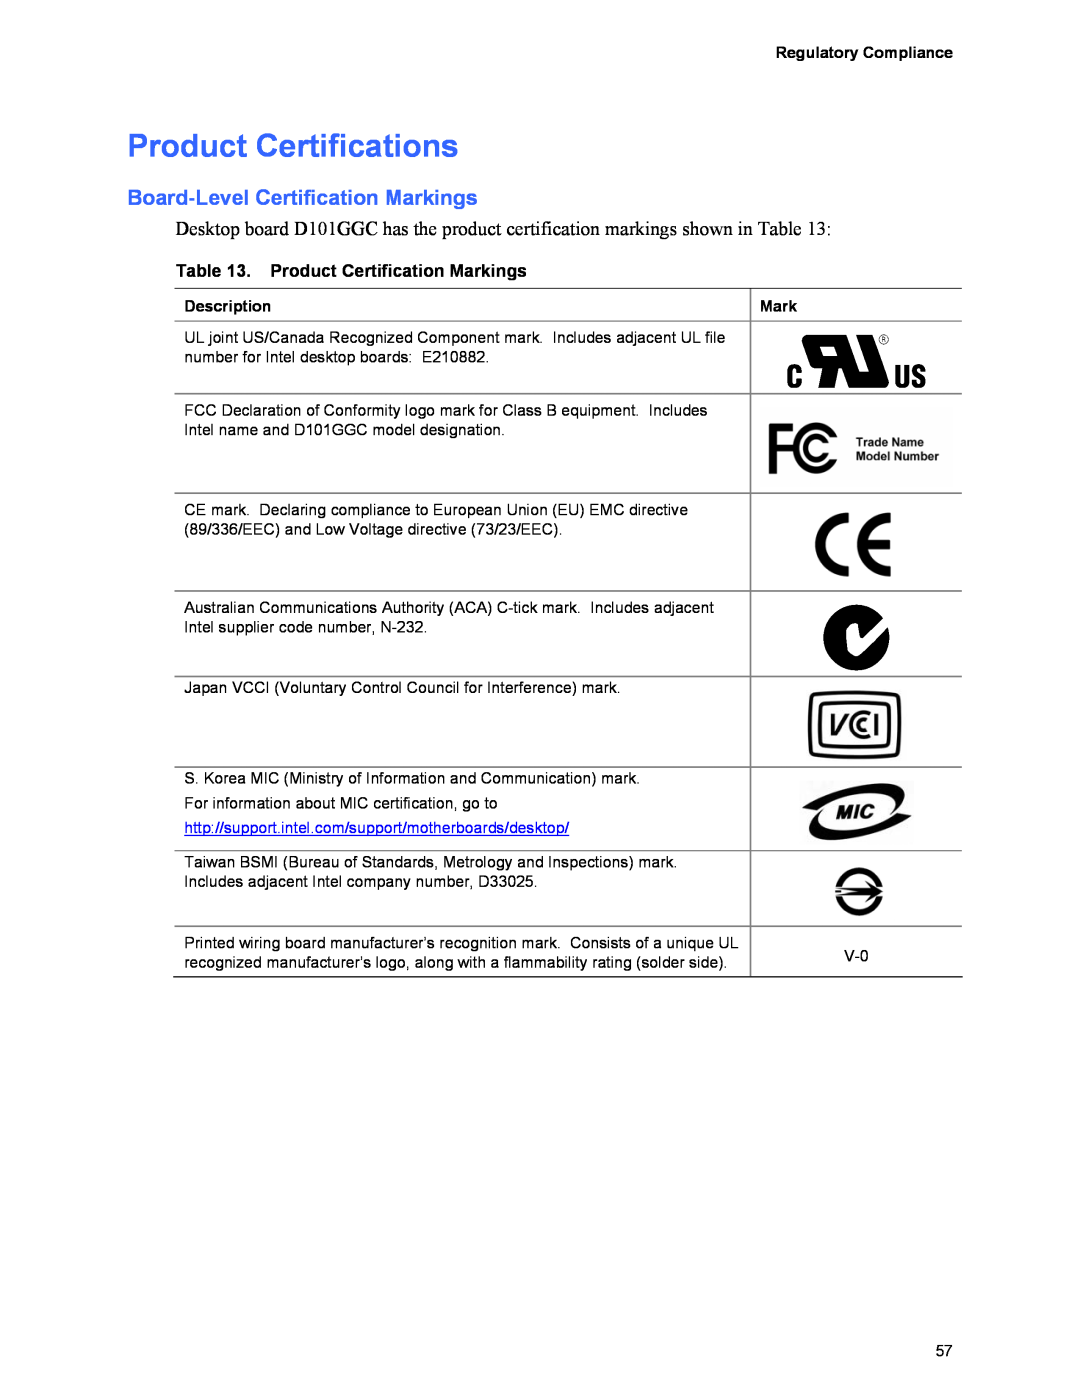 Intel D101GGC manual Product Certifications, Board-LevelCertification Markings, Product Certification Markings 